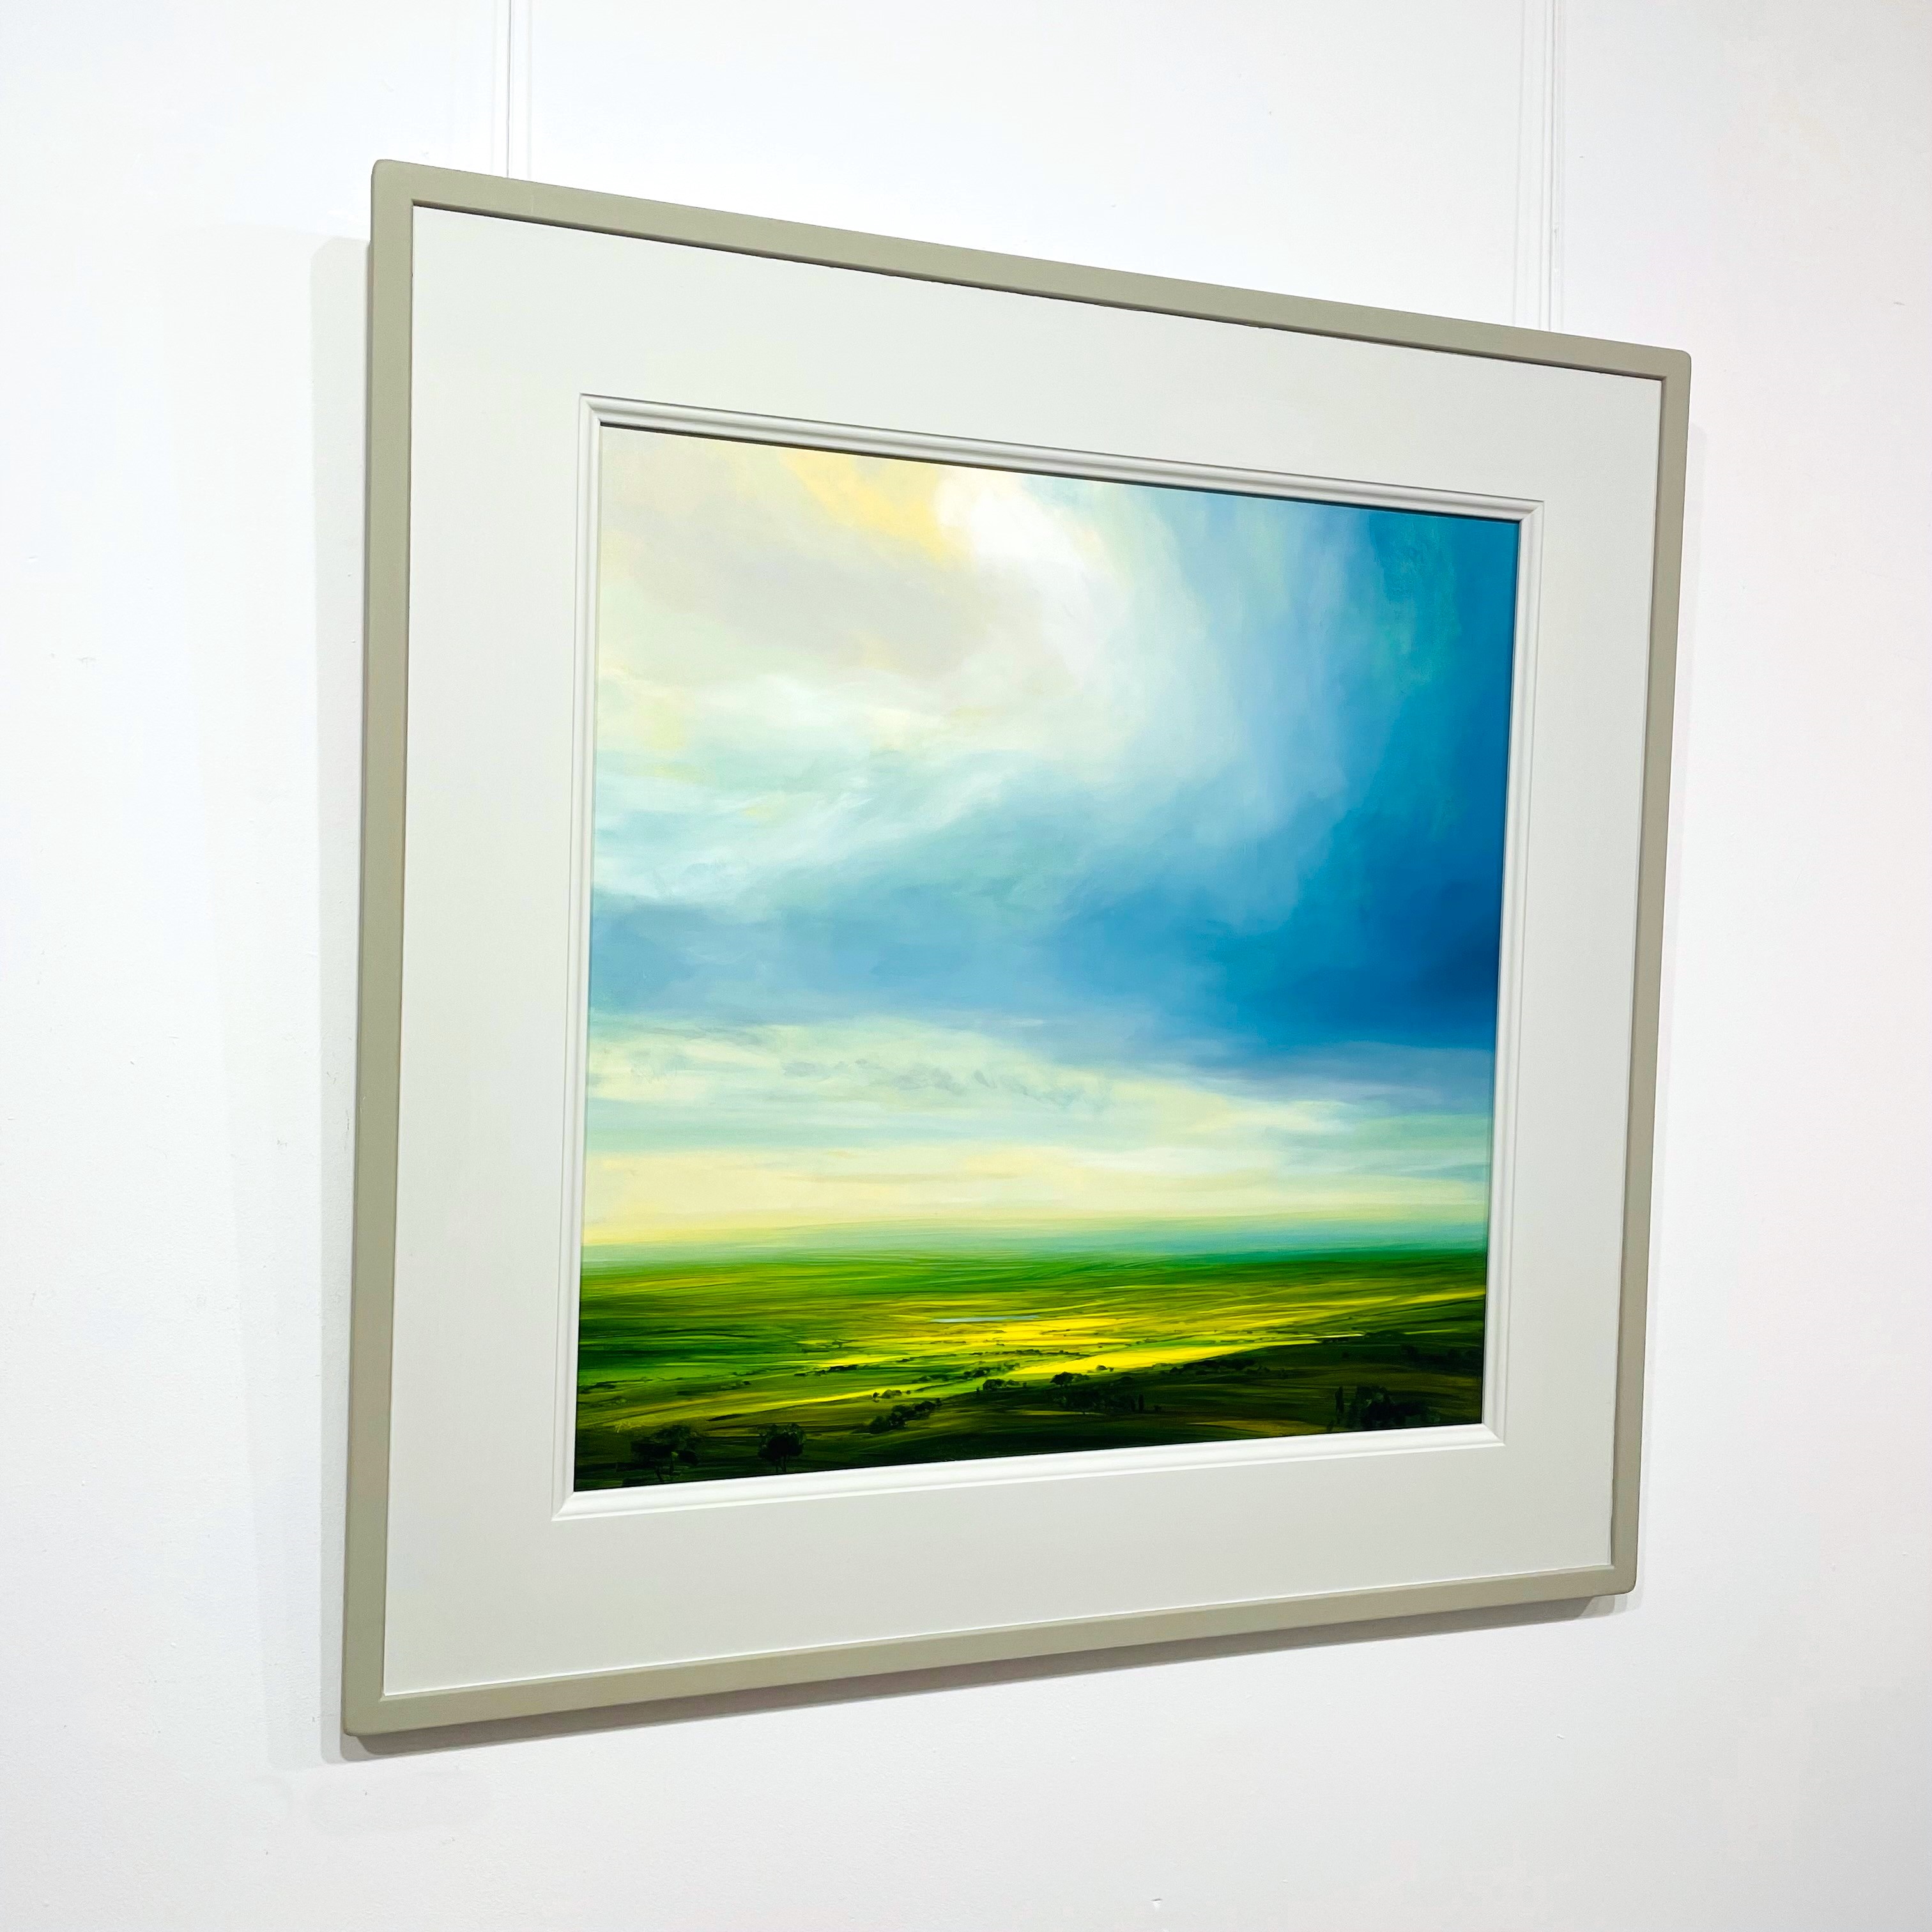 'Translucent Sky' by artist Harry Brioche